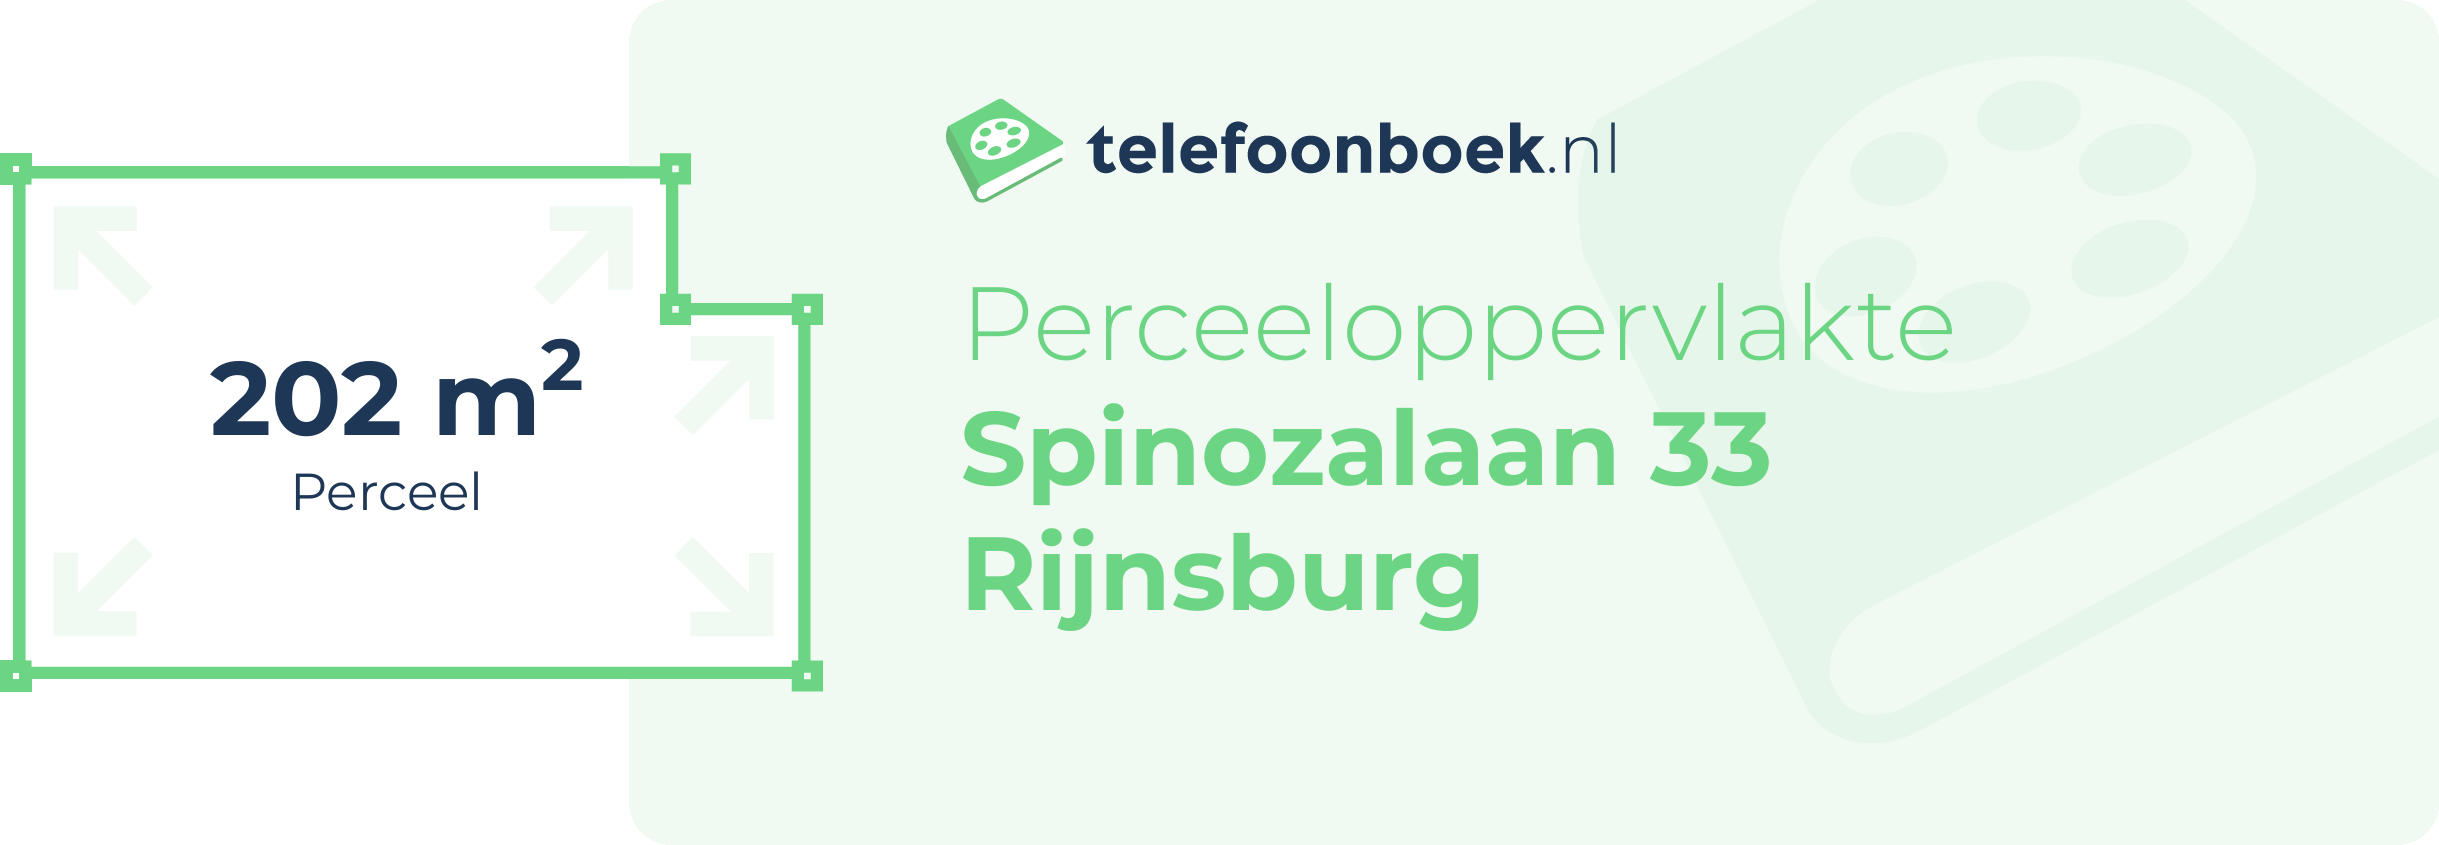 Perceeloppervlakte Spinozalaan 33 Rijnsburg